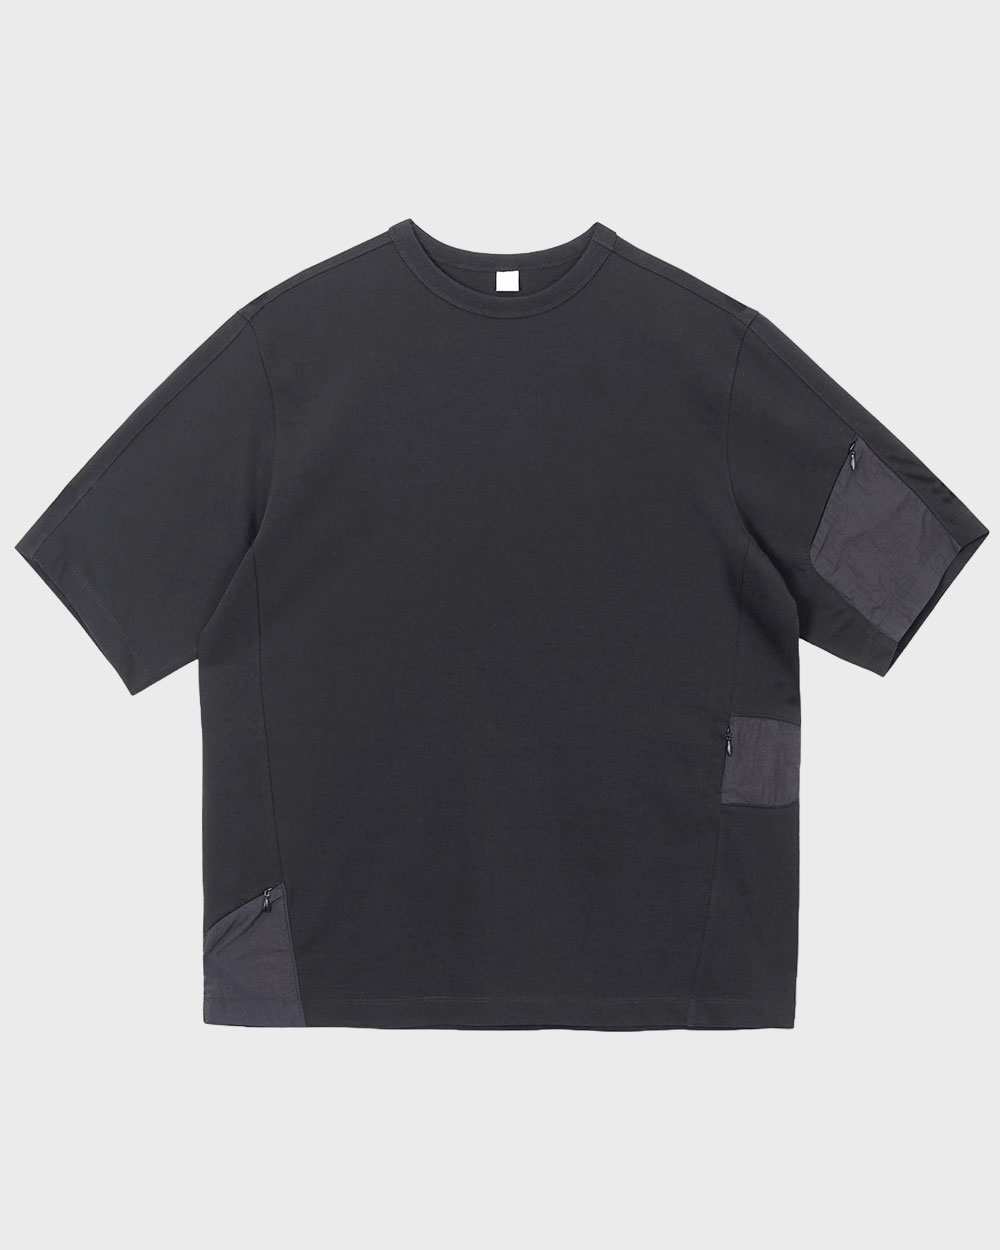 Pocket T-Shirts (Charcoal)